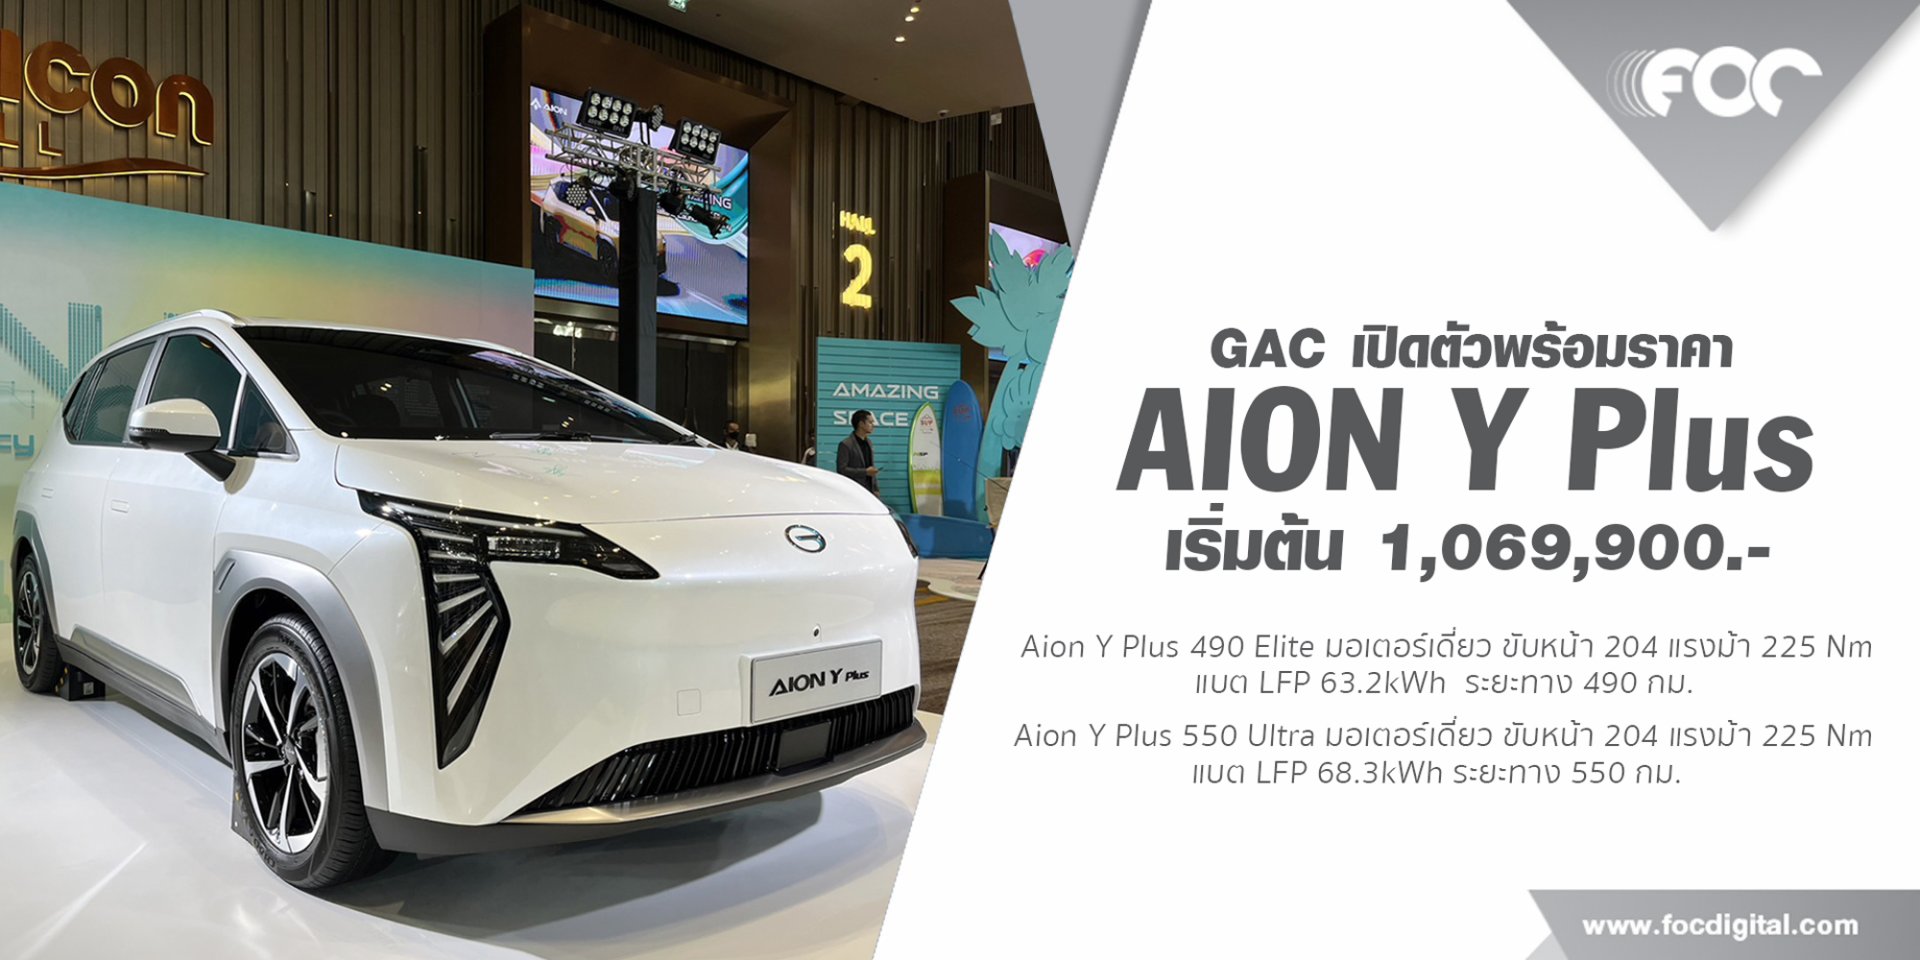 AION เปิดตัว “AION Y Plus” อย่างยิ่งใหญ่ในประเทศไทยในงาน “Y so AMAZING” ทําตลาดในไทย 2 รุ่น  เริ่มต้น 1,069,900.-